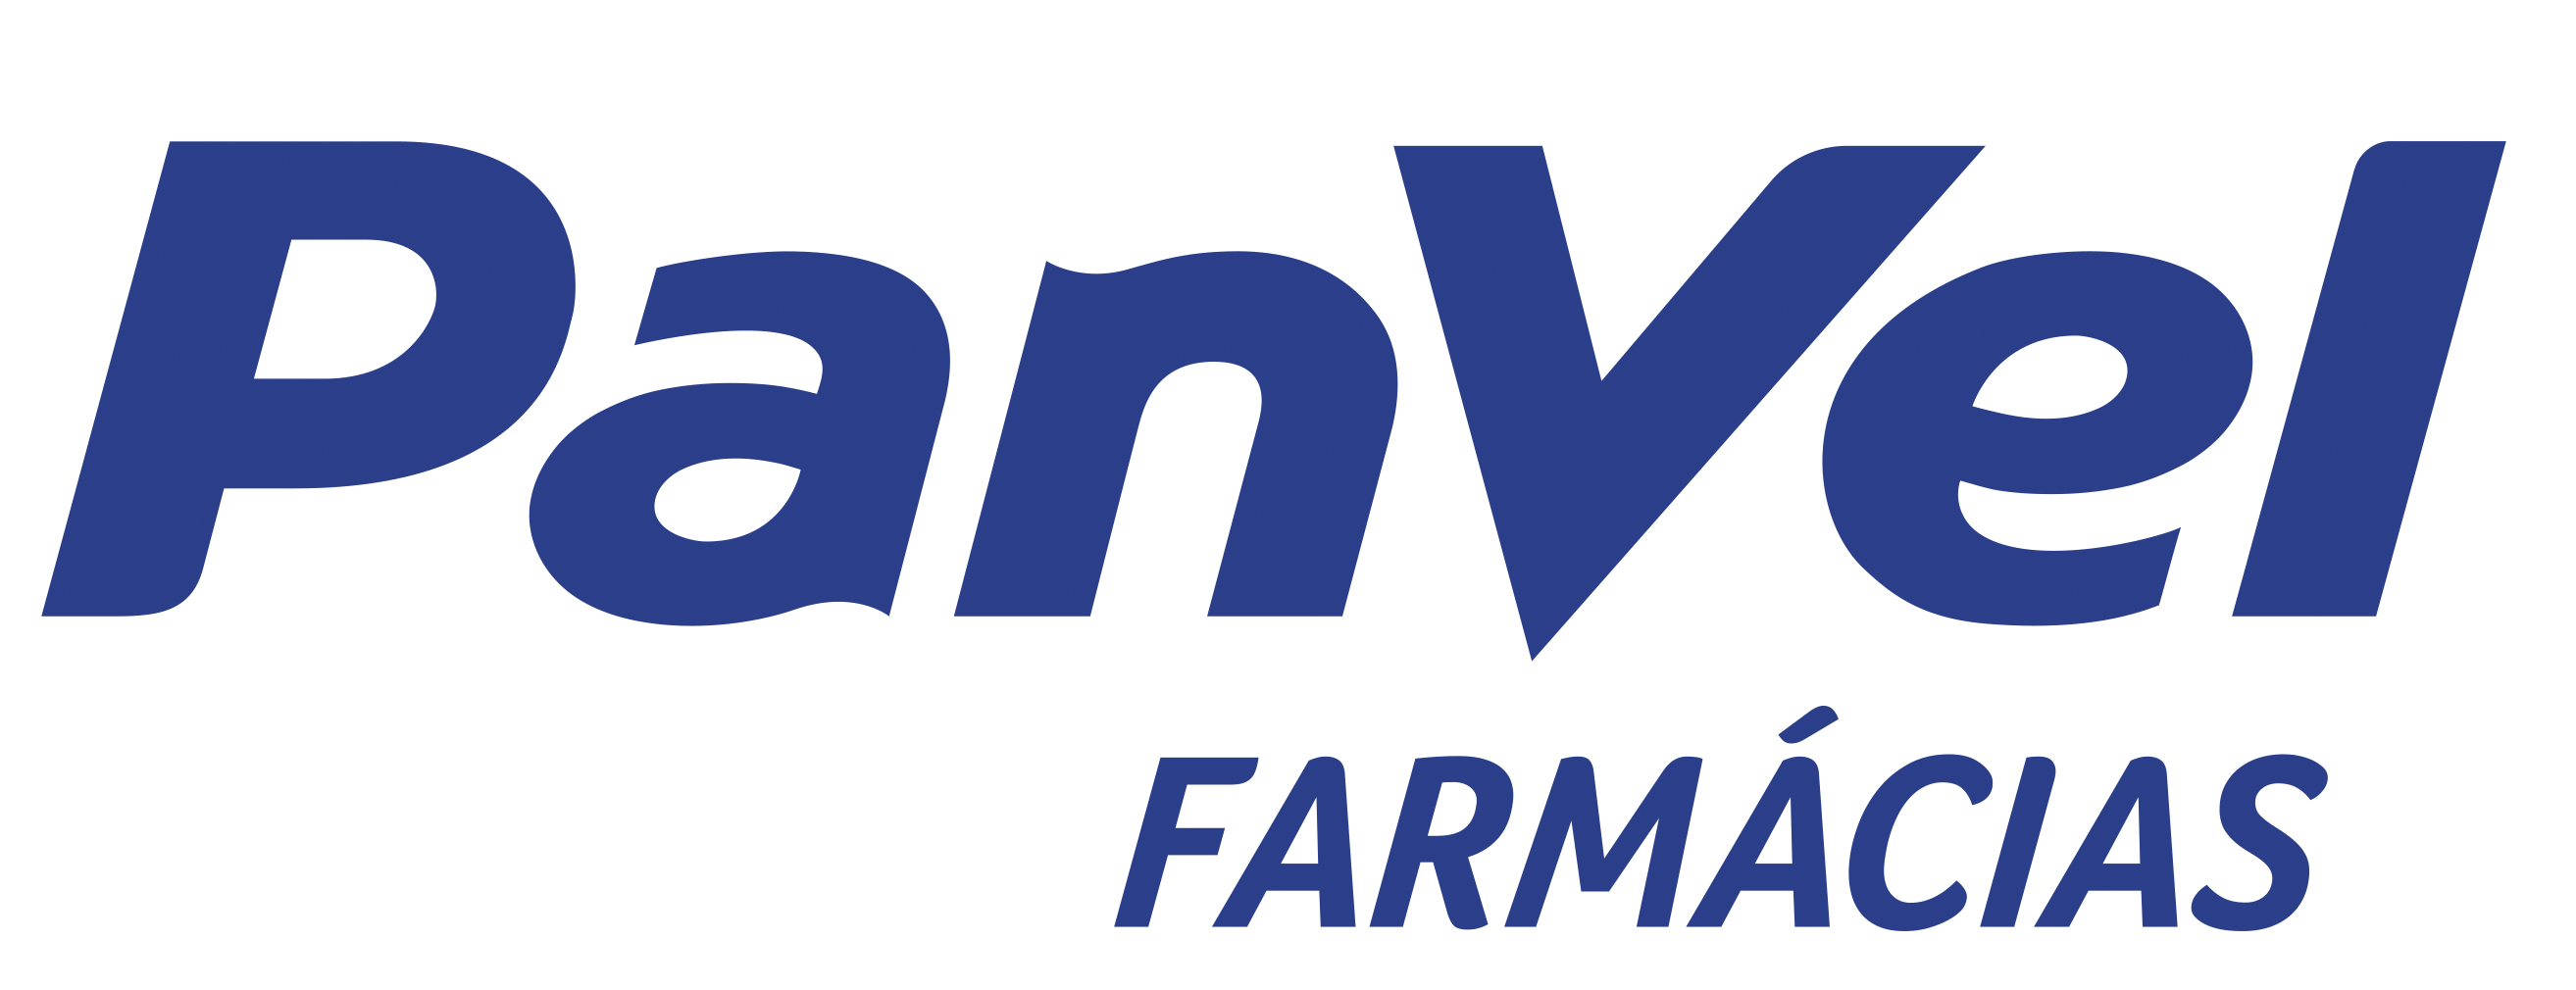 Logo PanVel Farmacias Positivo - Calcitran MDK